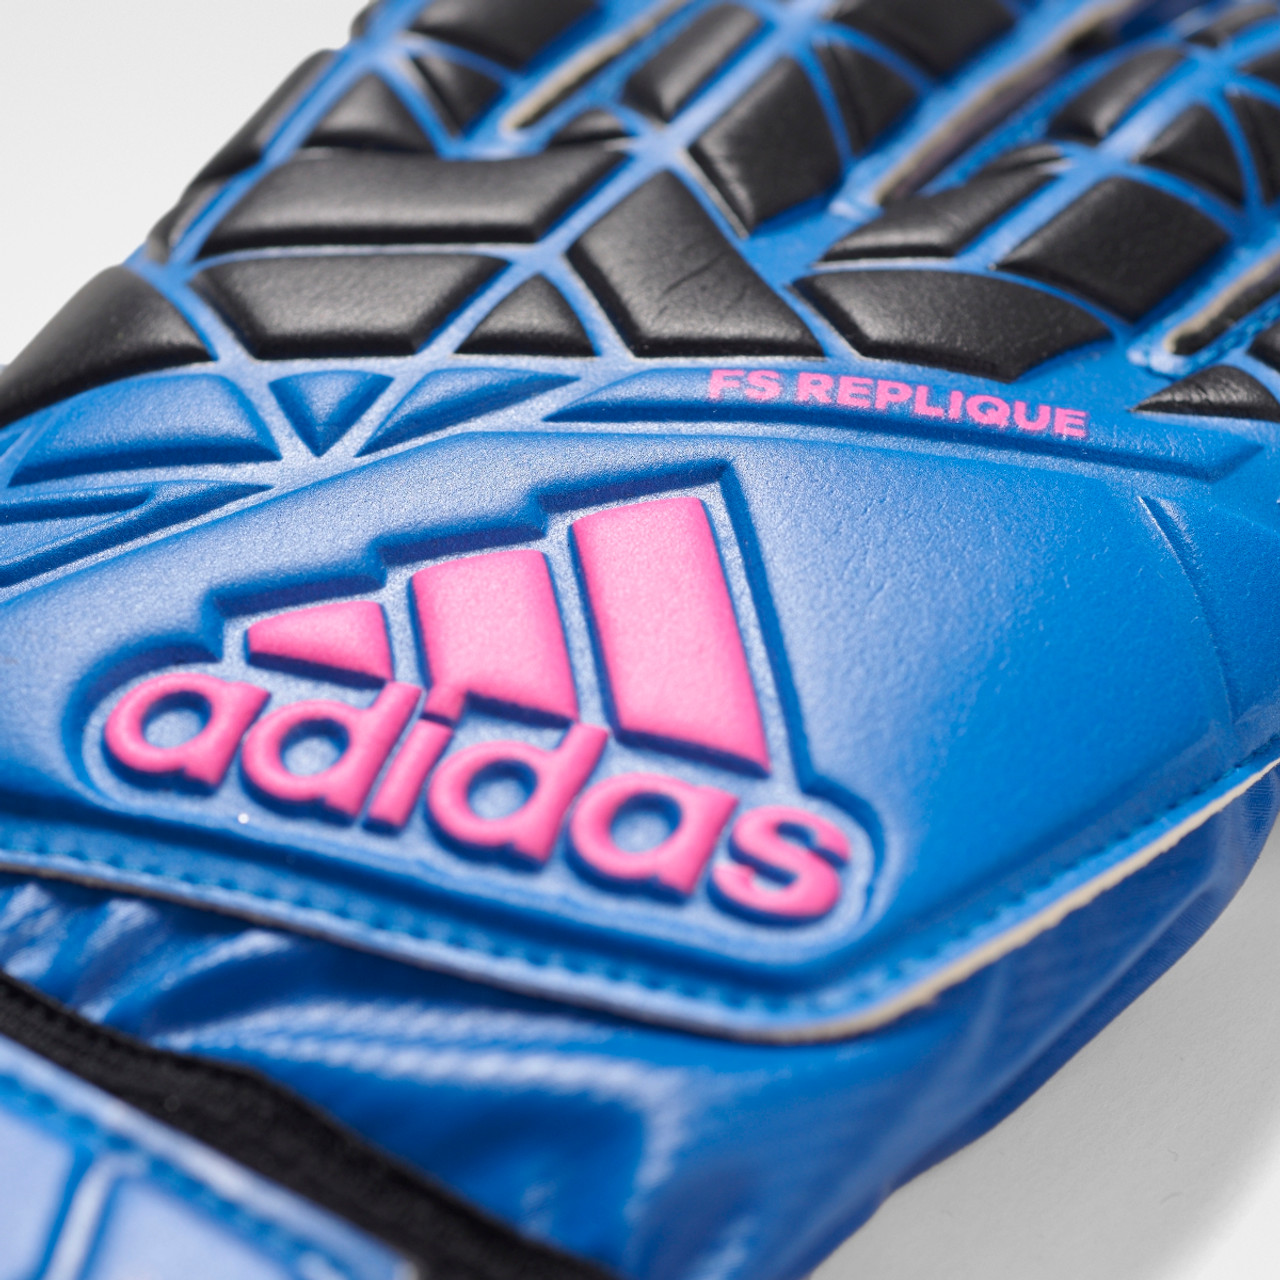 Adidas Ace FS Replique Soccer Goal Keeper Gloves